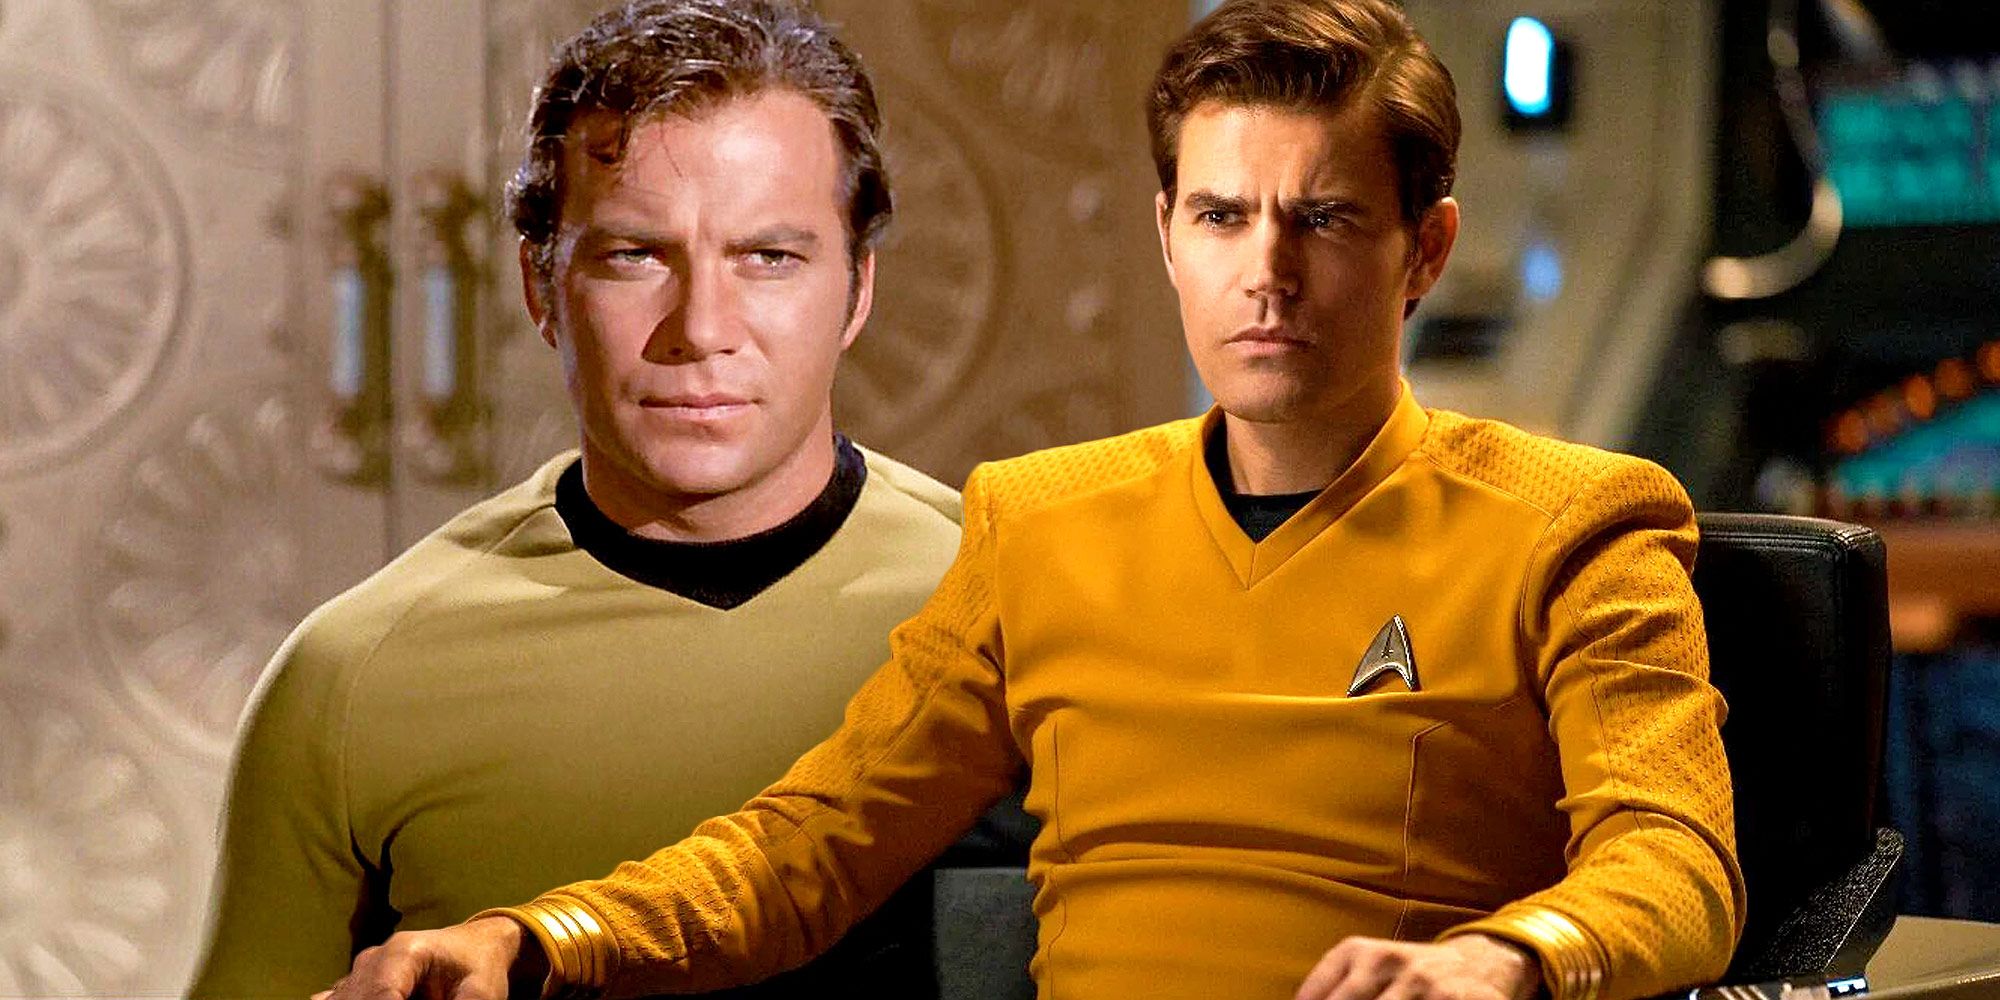 New Kirk Star Trek Cast